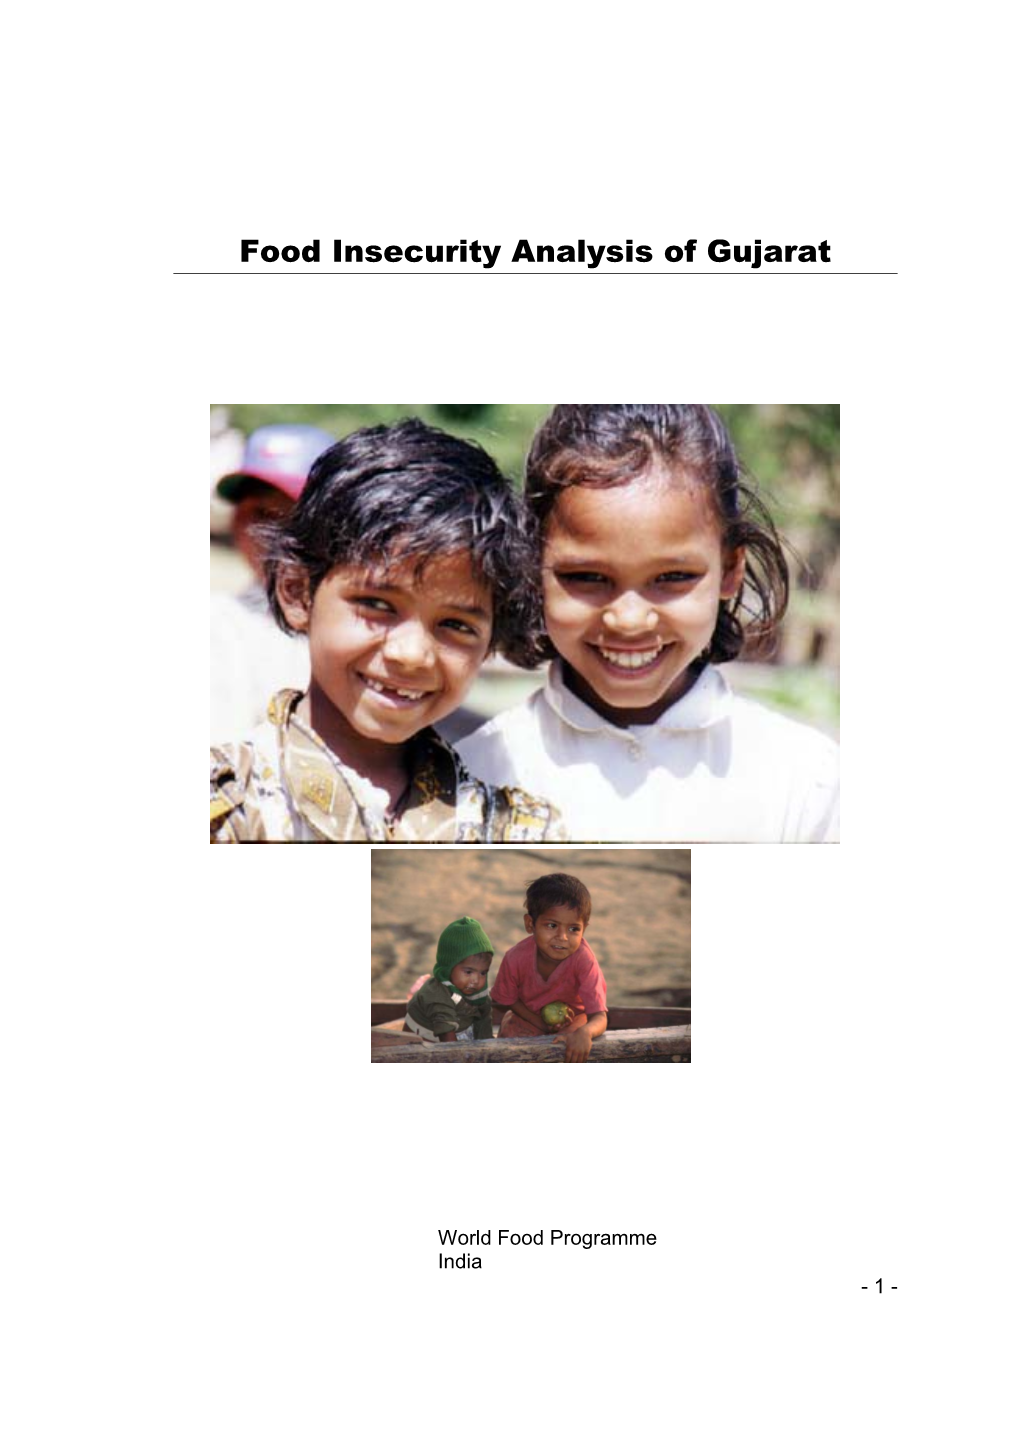 Food Insecurity in Bihar , Gujarat and Uttar Pradesh